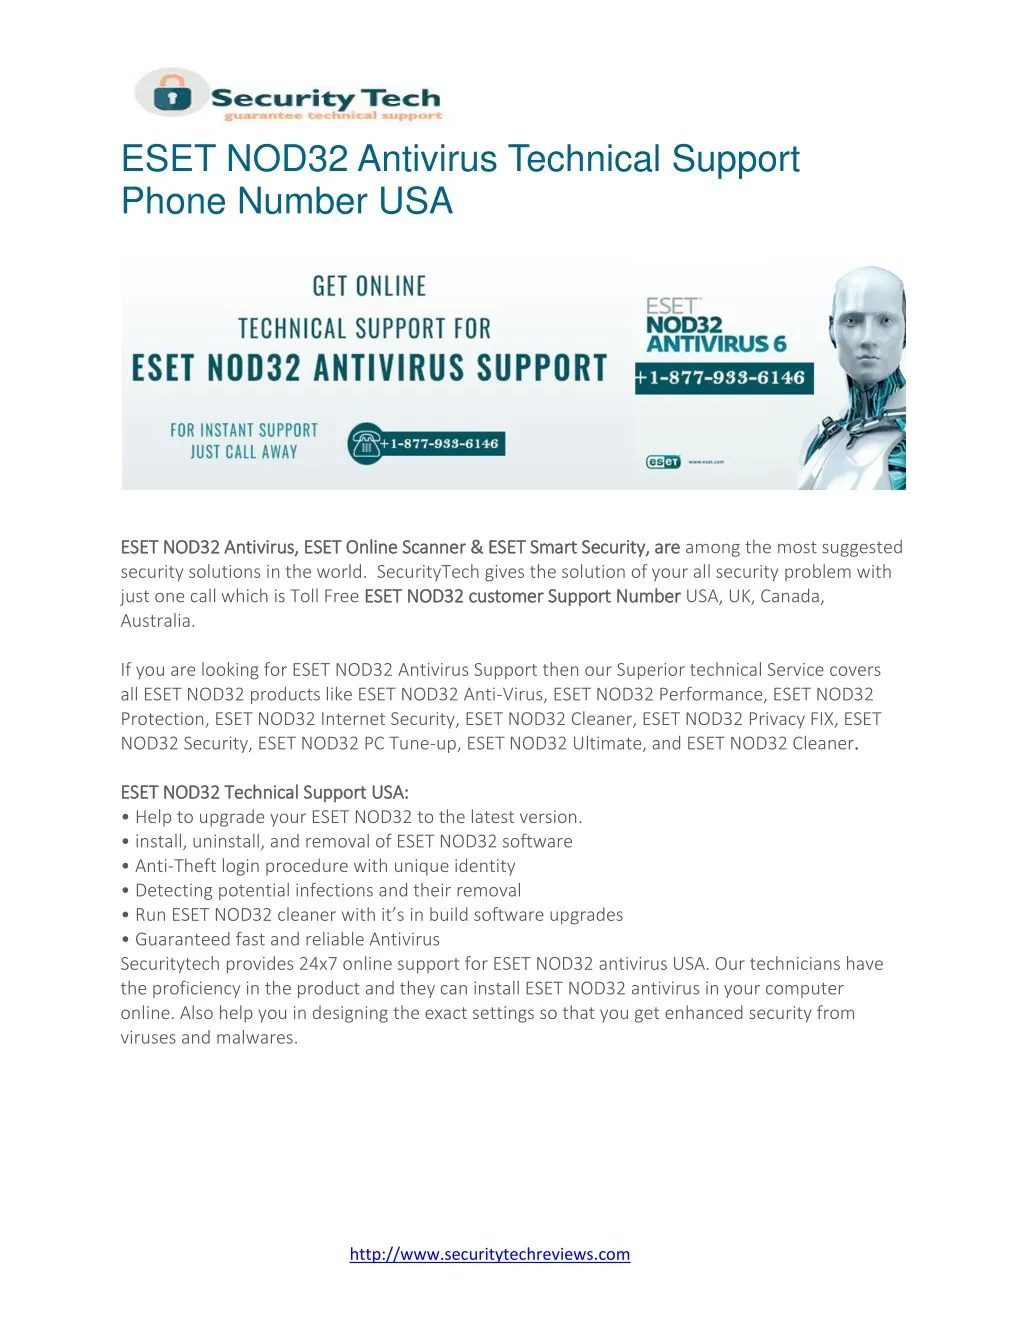 eset nod32 antivirus technical support phone